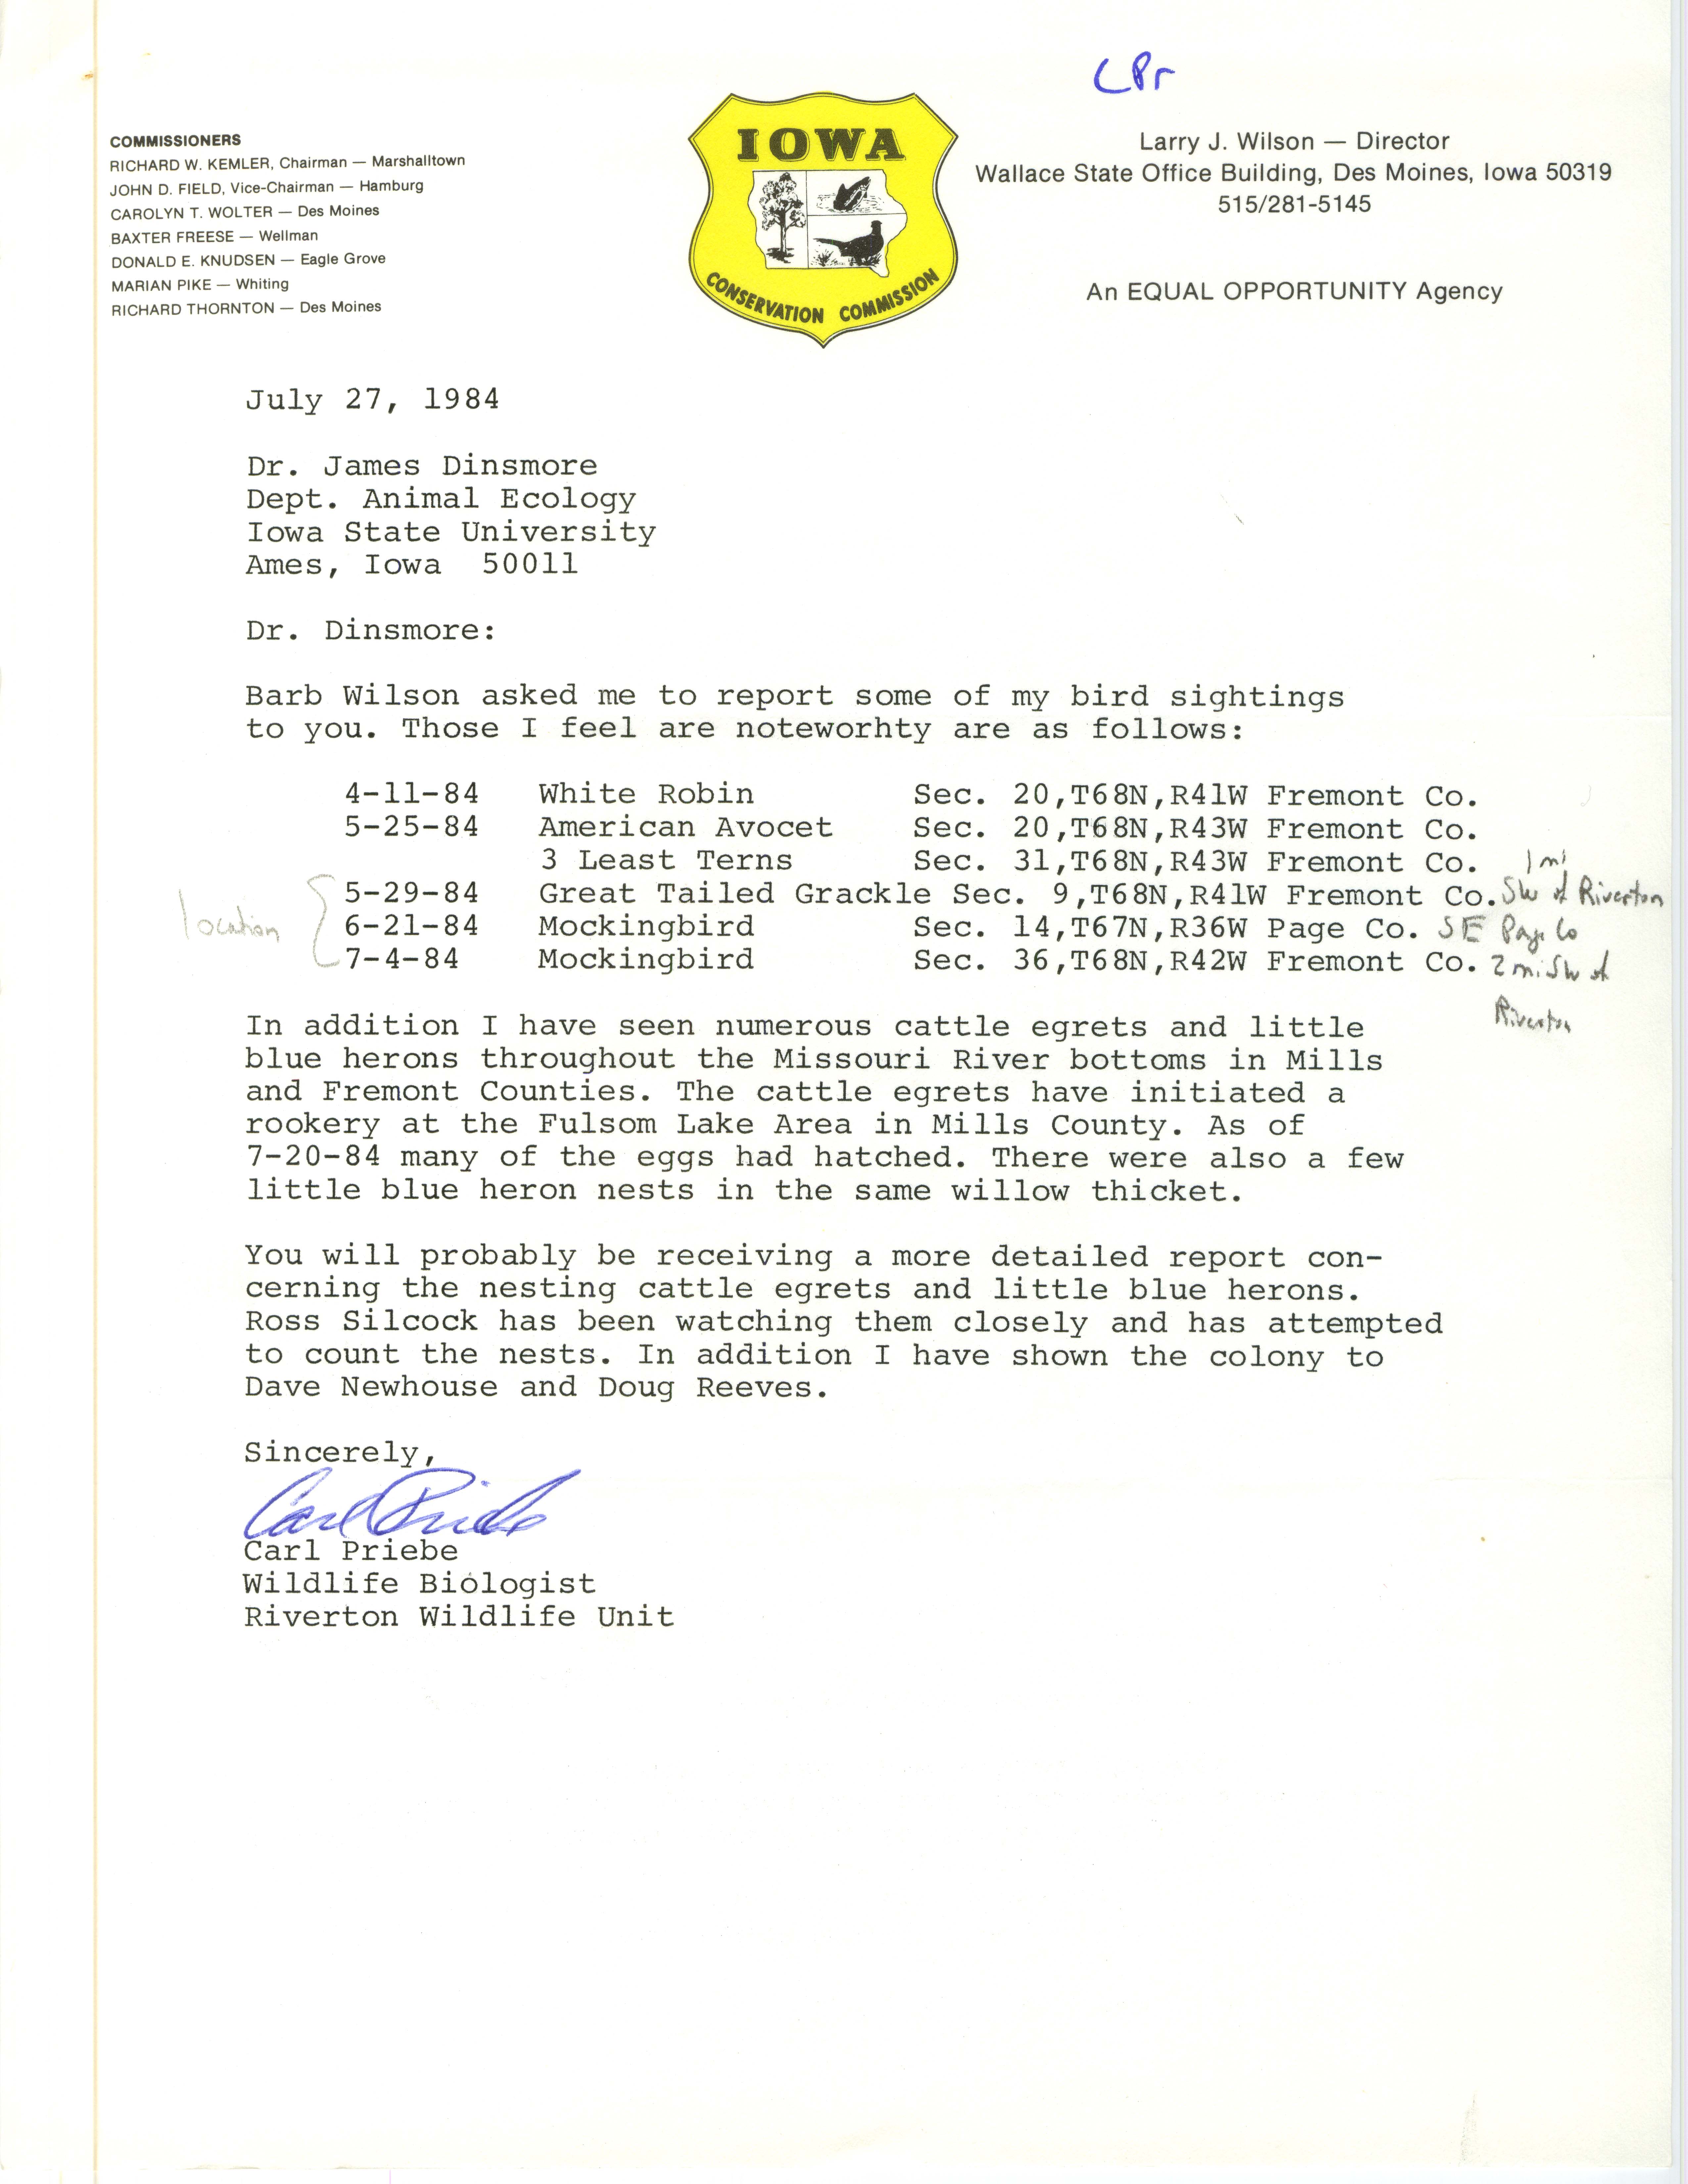 Carl Priebe letter to James J. Dinsmore regarding bird sightings, July 27, 1984